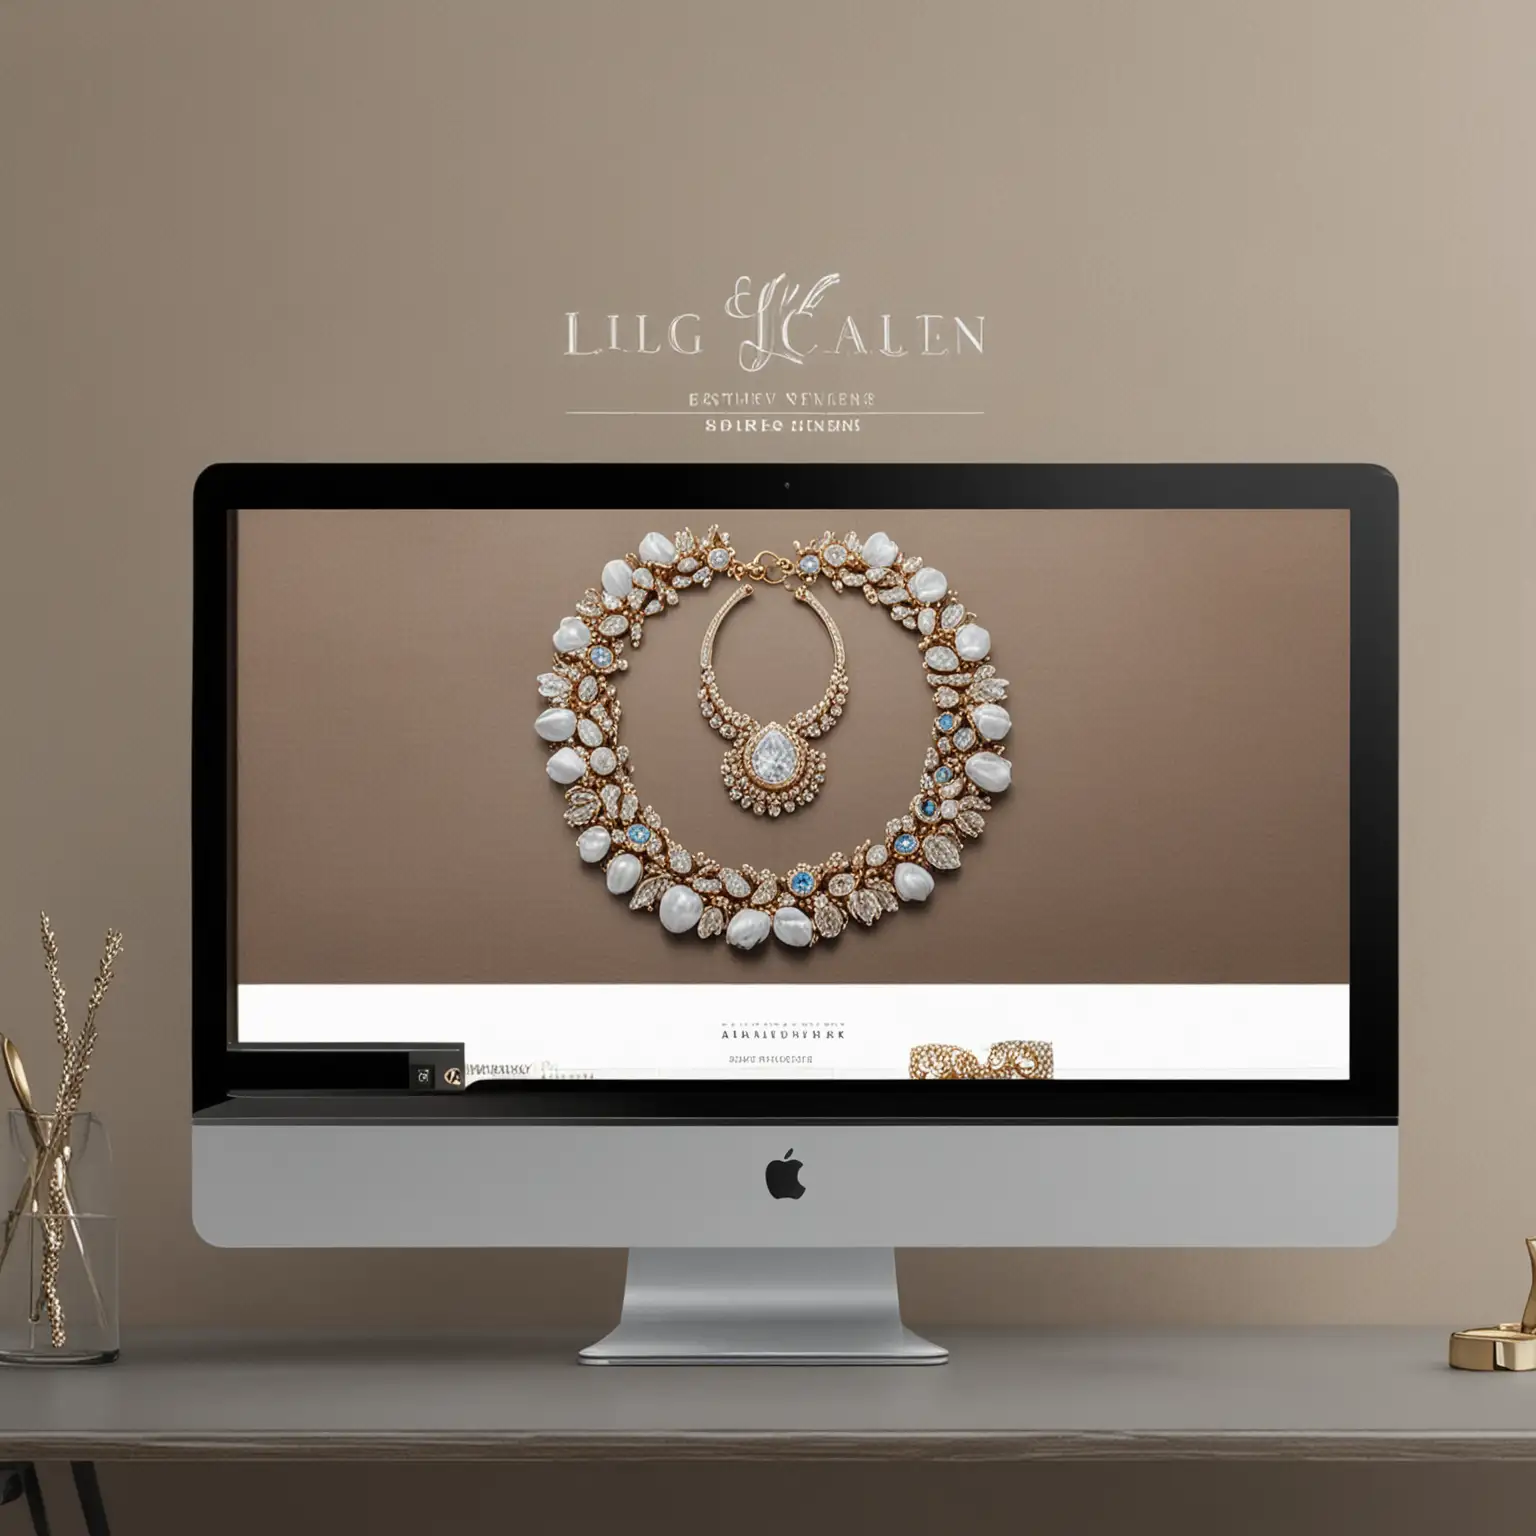 Elegant Jewelry Display on Modern Website Mockup